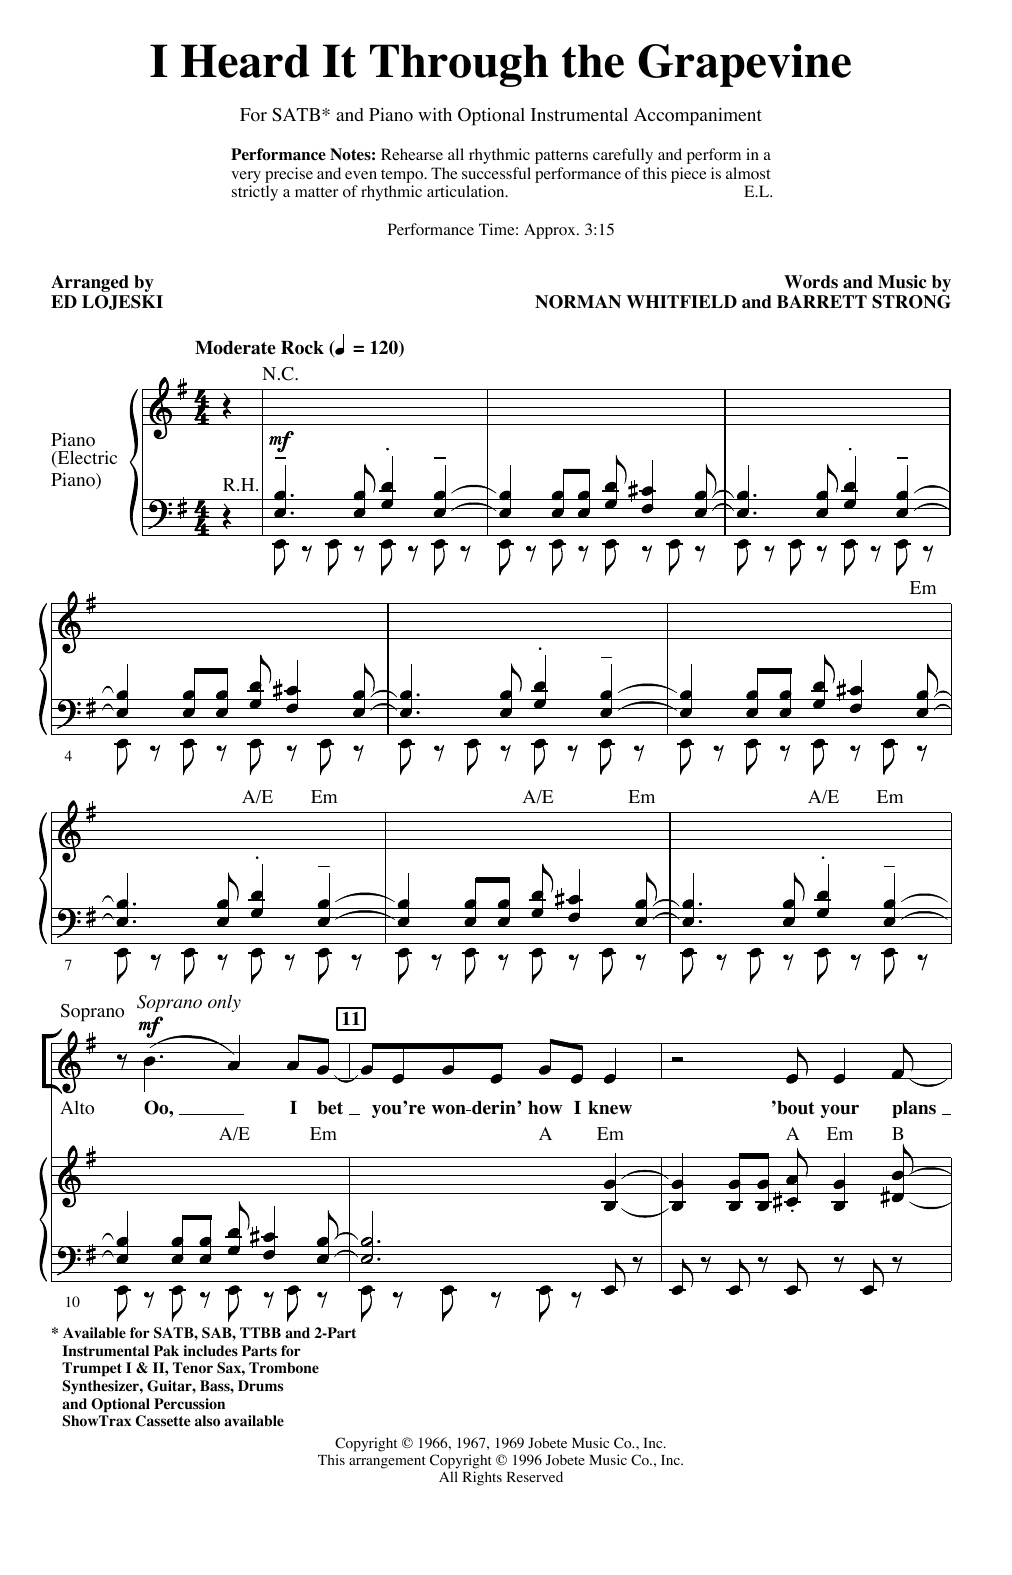 Marvin Gaye I Heard It Through The Grapevine (arr. Ed Lojeski) Sheet Music Notes & Chords for SATB Choir - Download or Print PDF